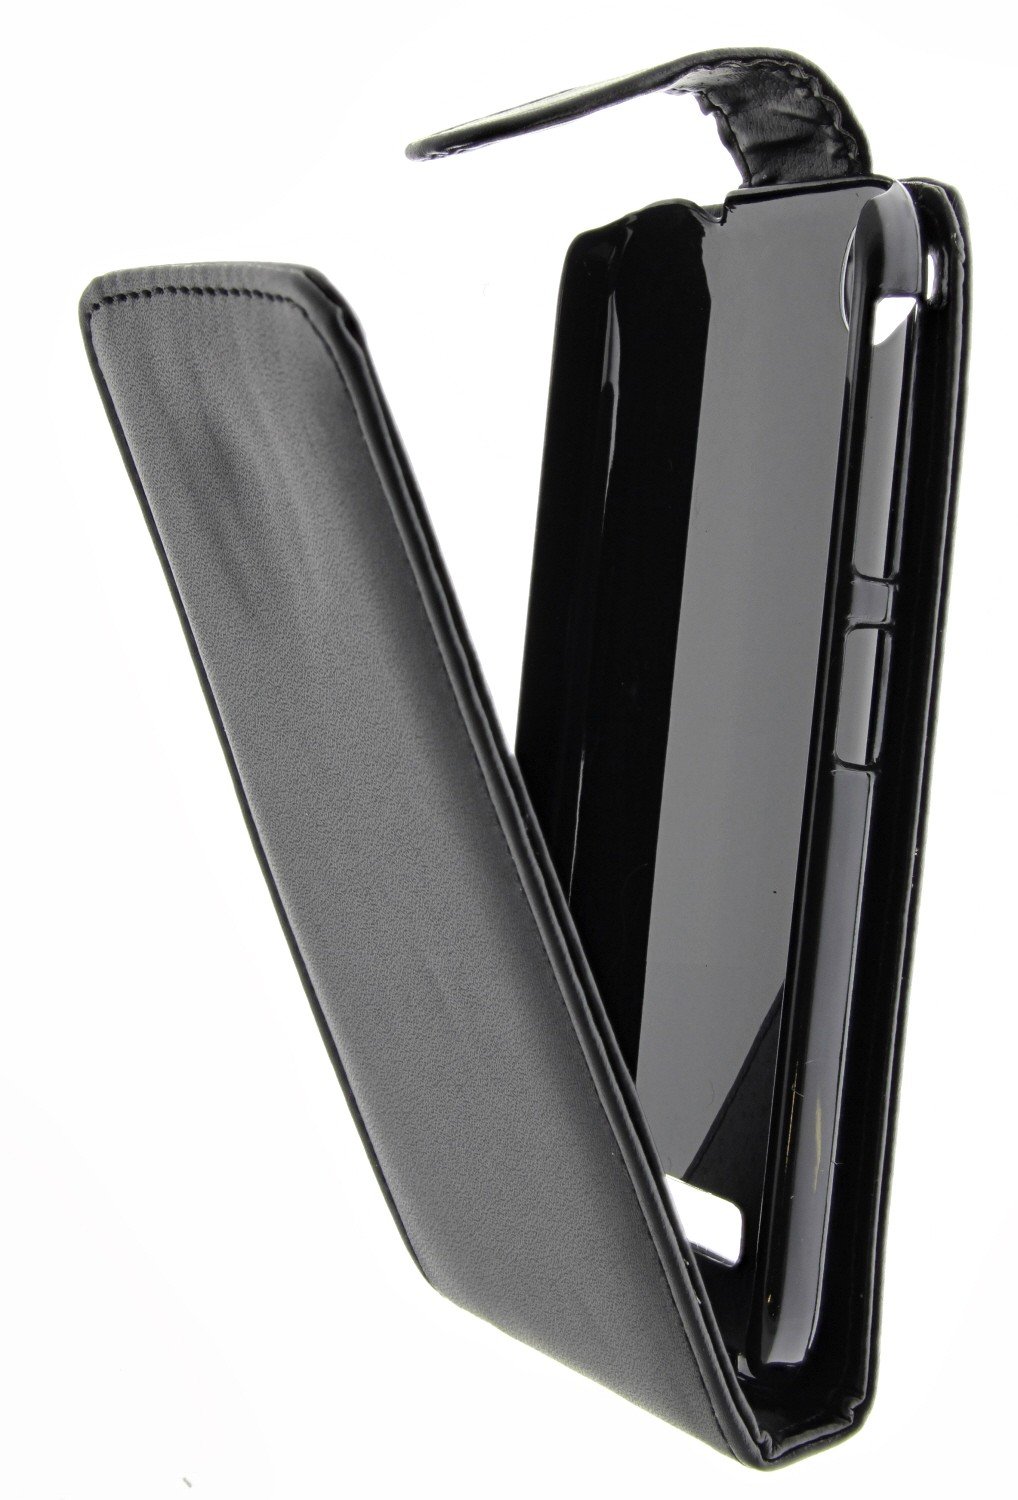 blad Skim Opblazen Hoesje HTC Desire 320 flip case zwart | MobileSupplies.nl